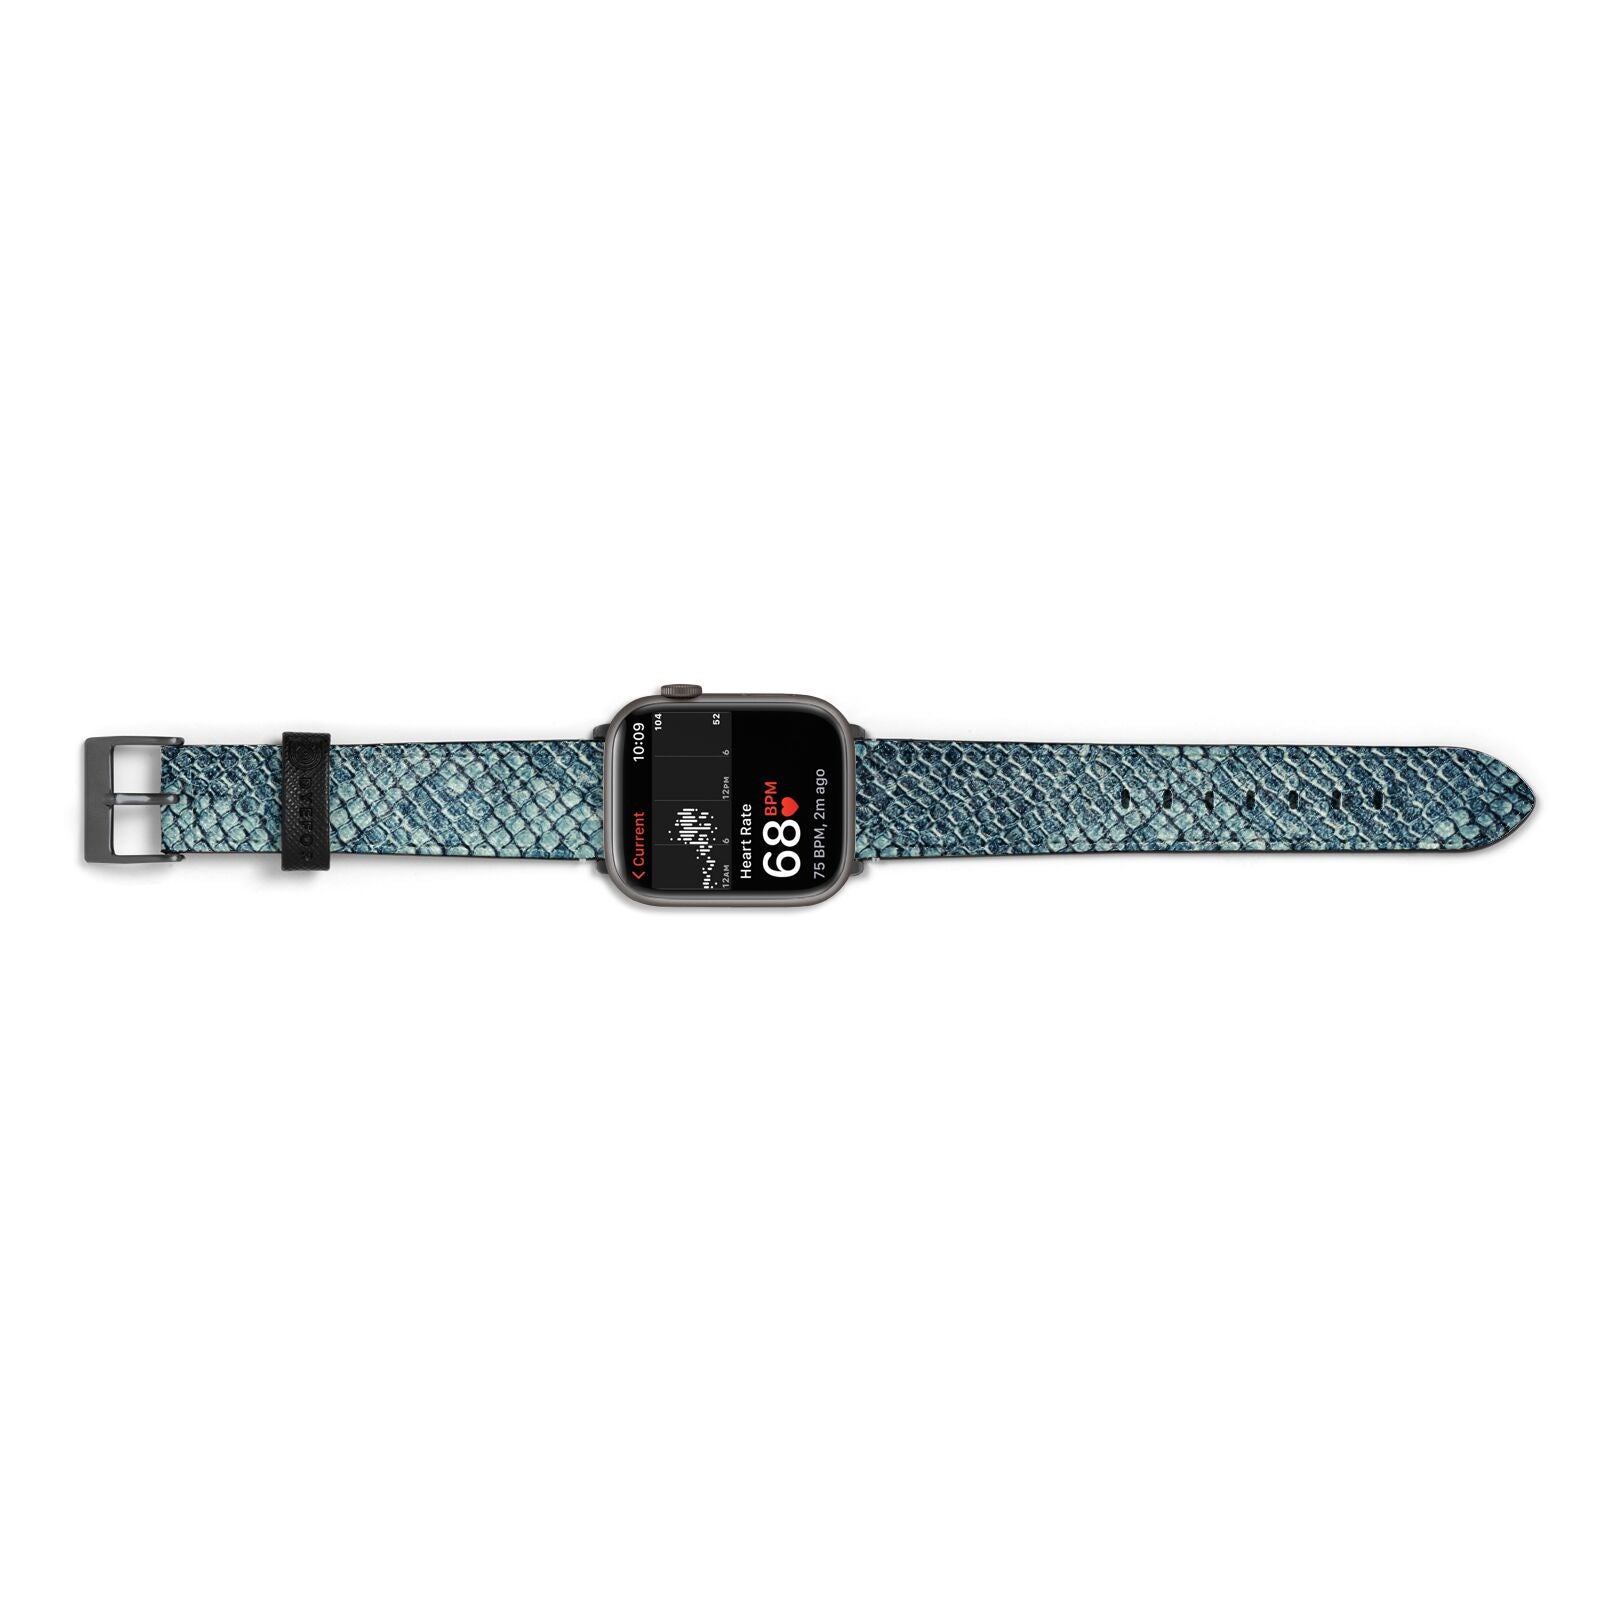 Teal Snakeskin Apple Watch Strap Size 38mm Landscape Image Space Grey Hardware